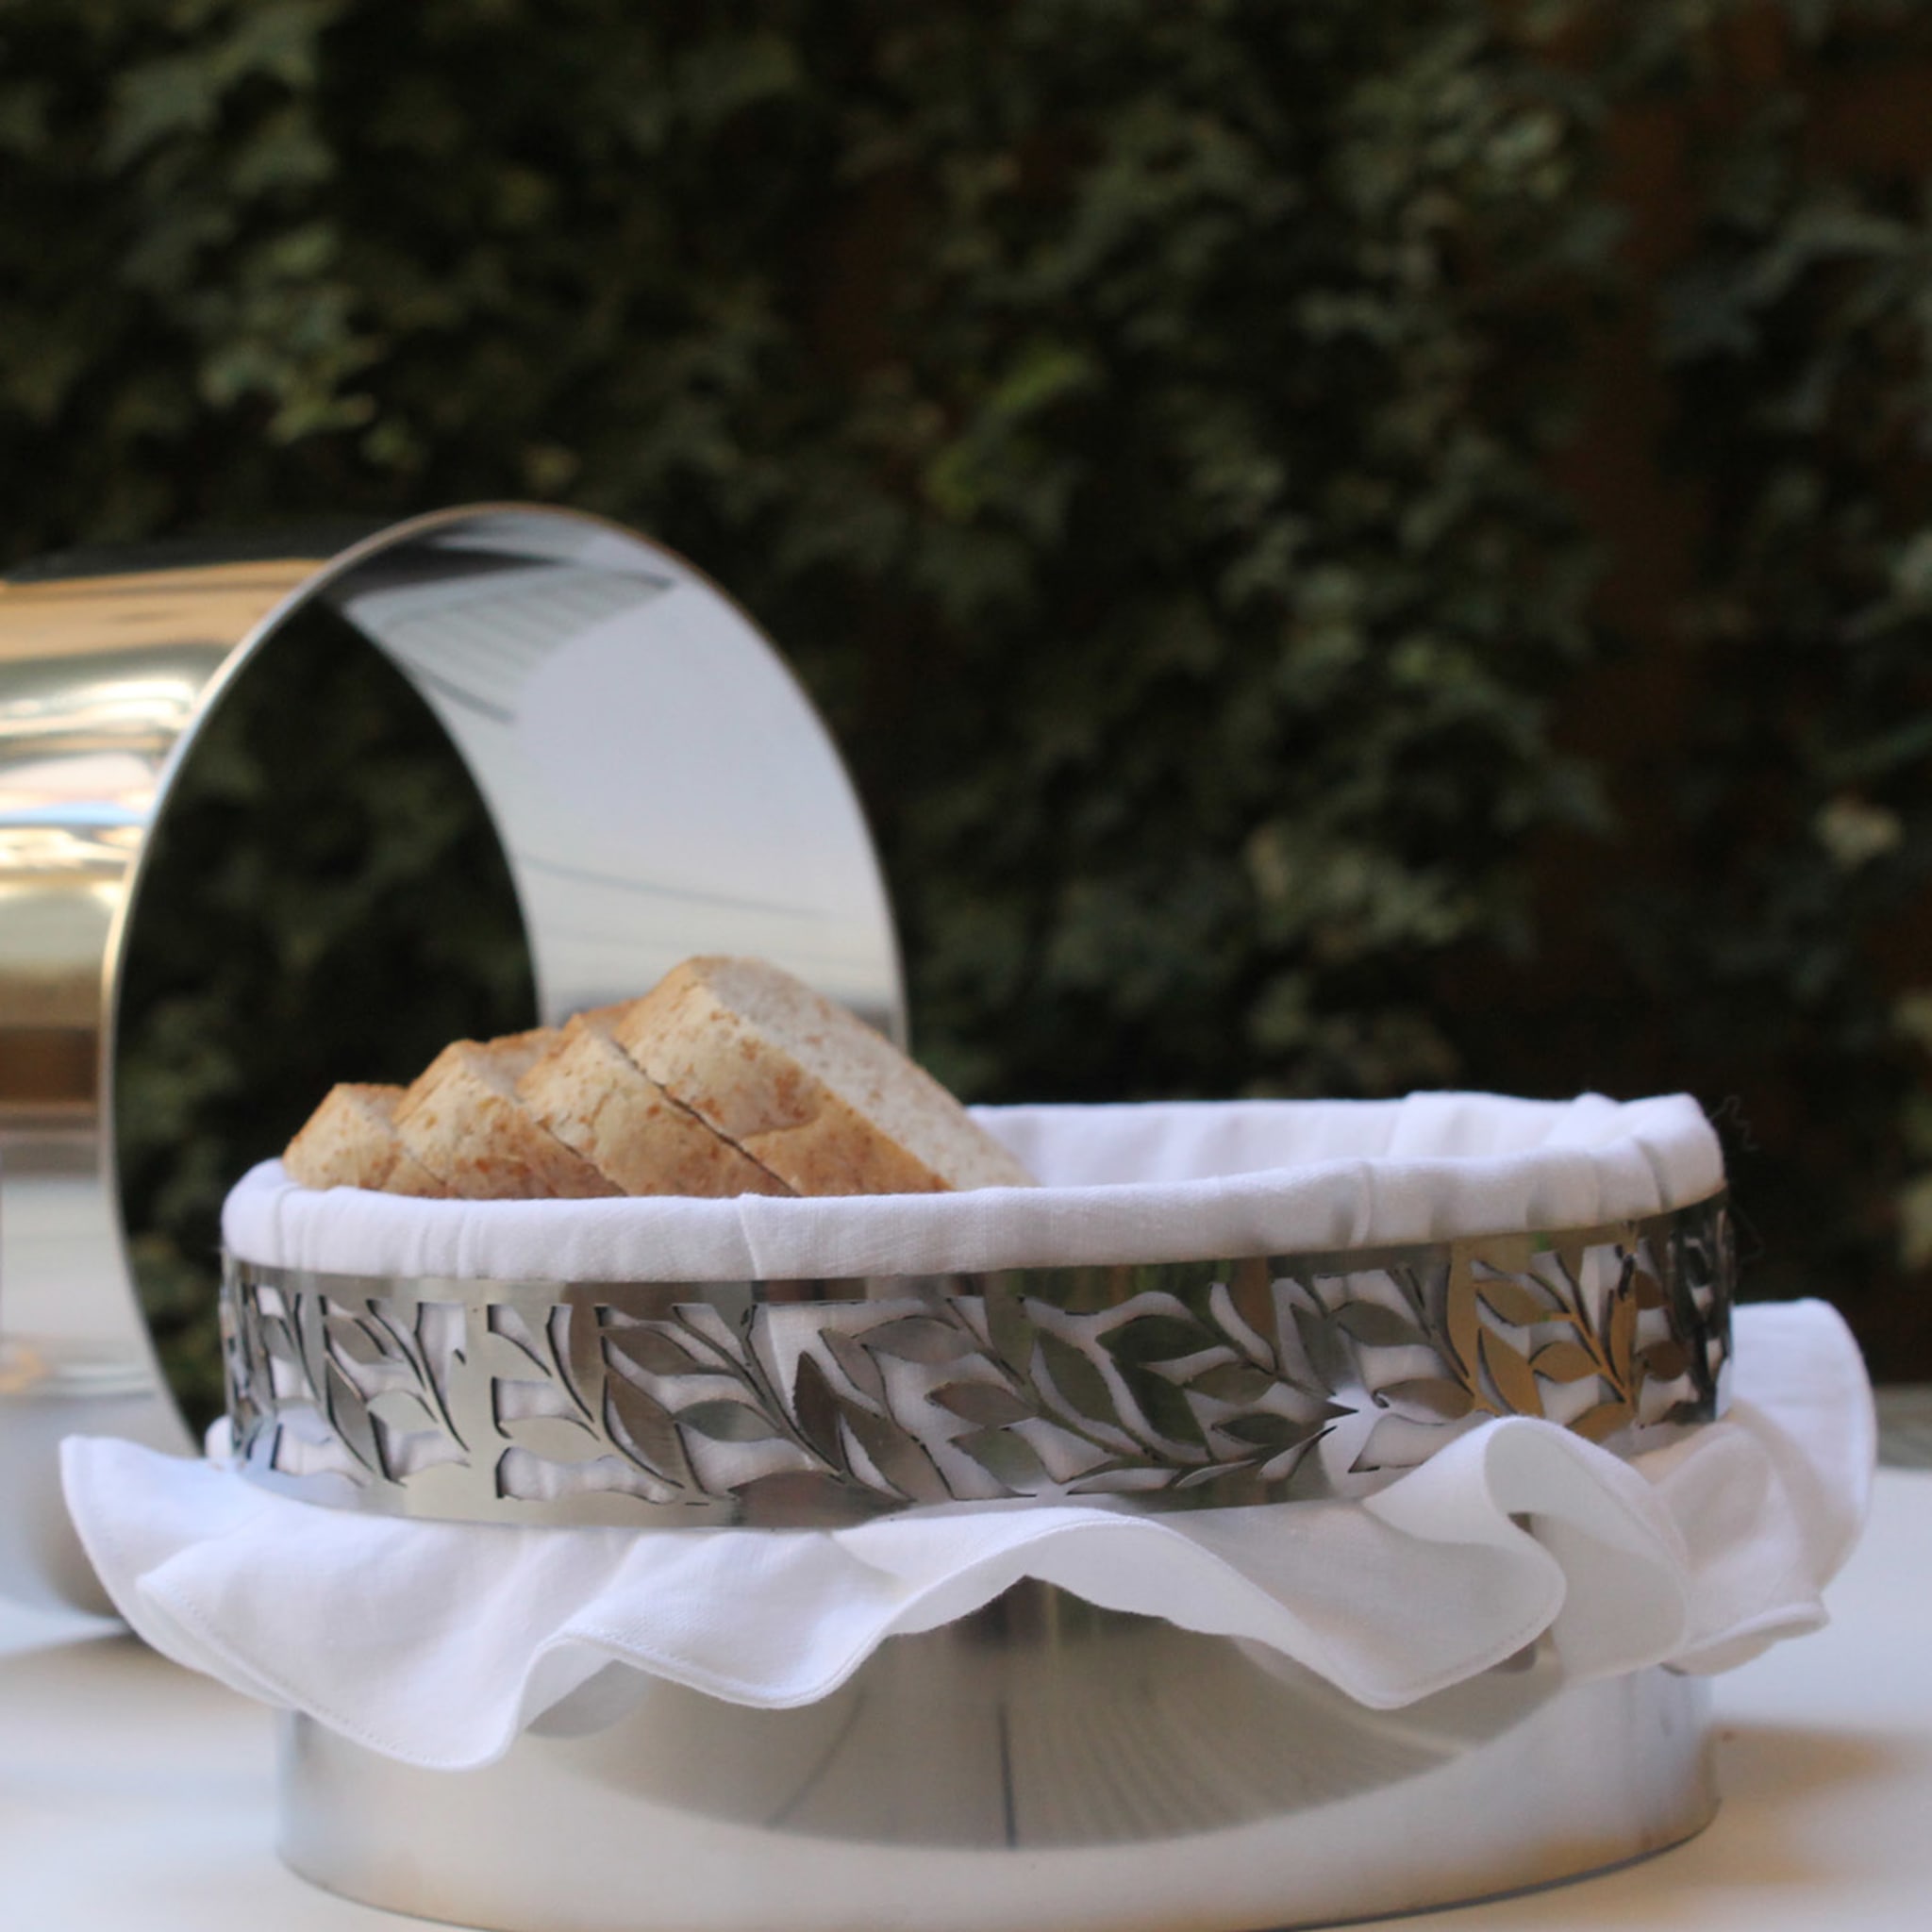 Pane&Pane Round Silvery Breadbasket - Alternative view 1